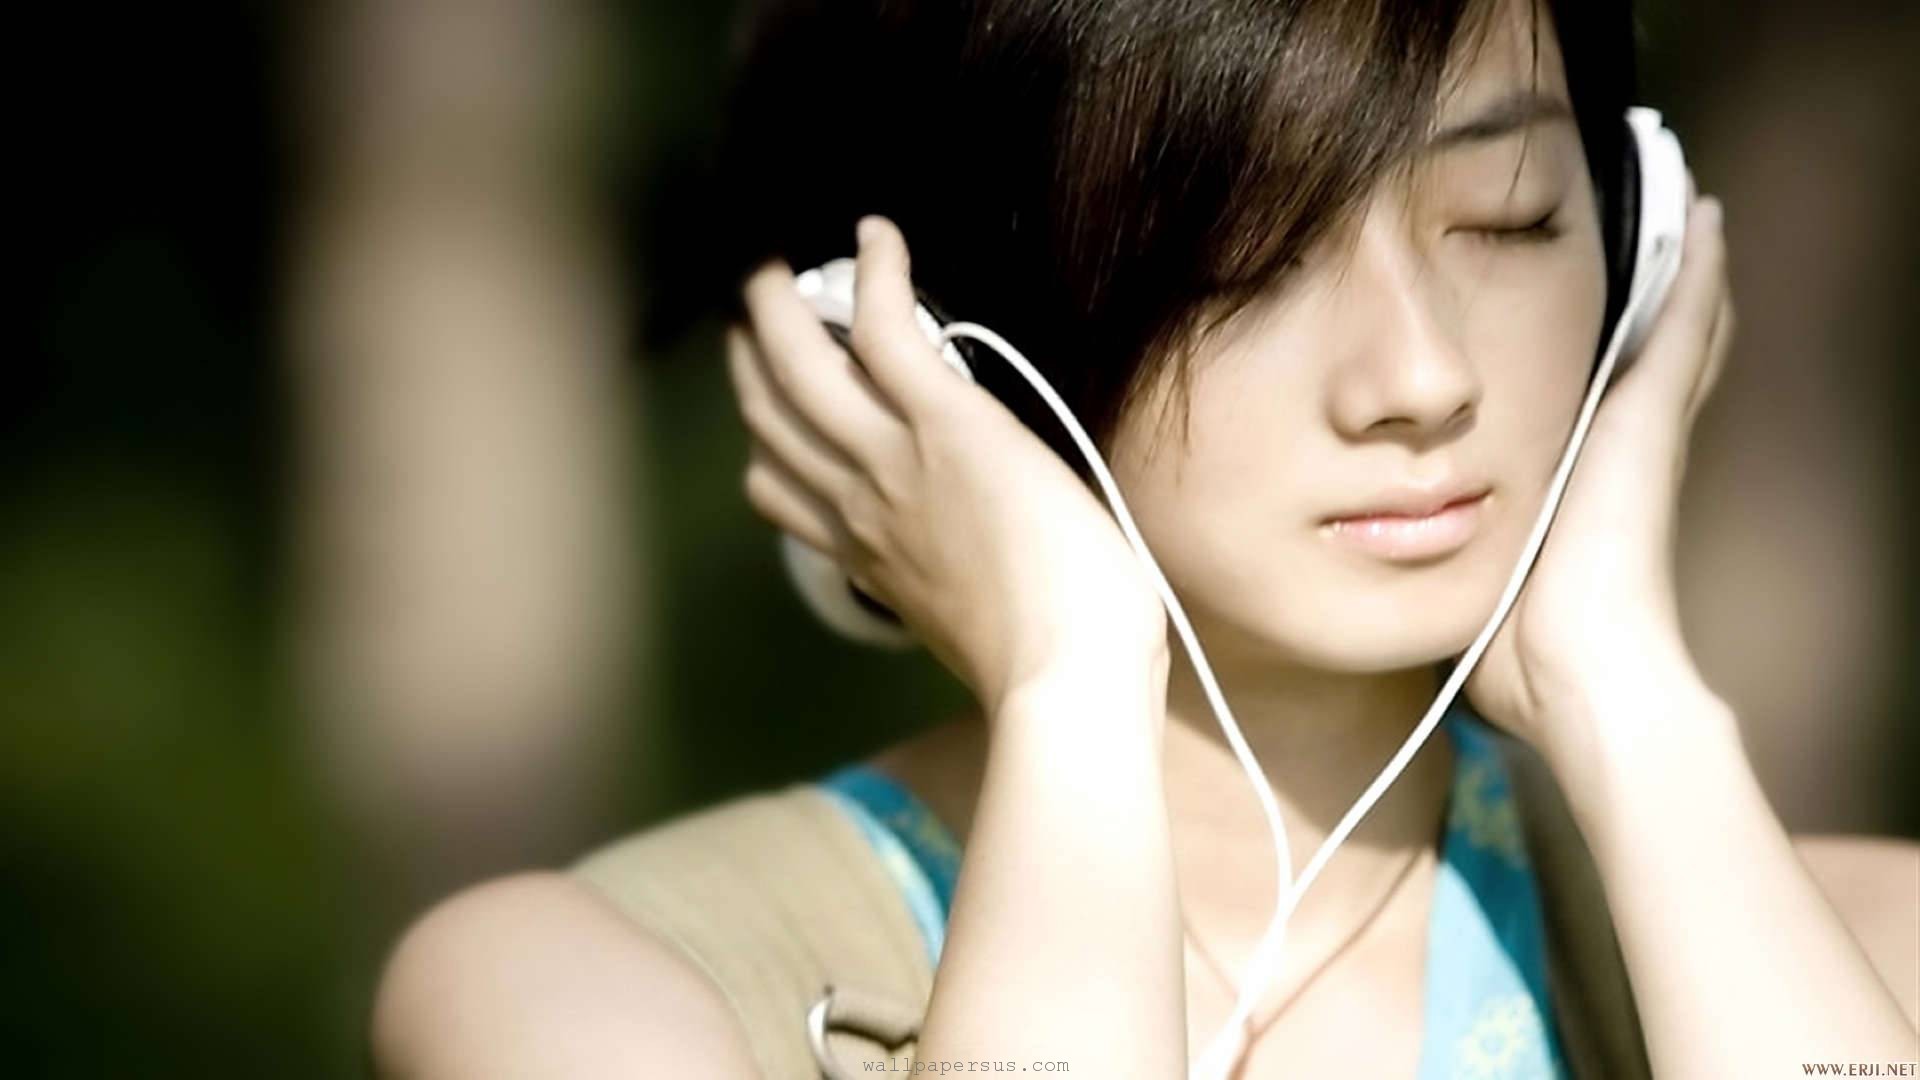 Beautiful Girl With Headphones #6958748